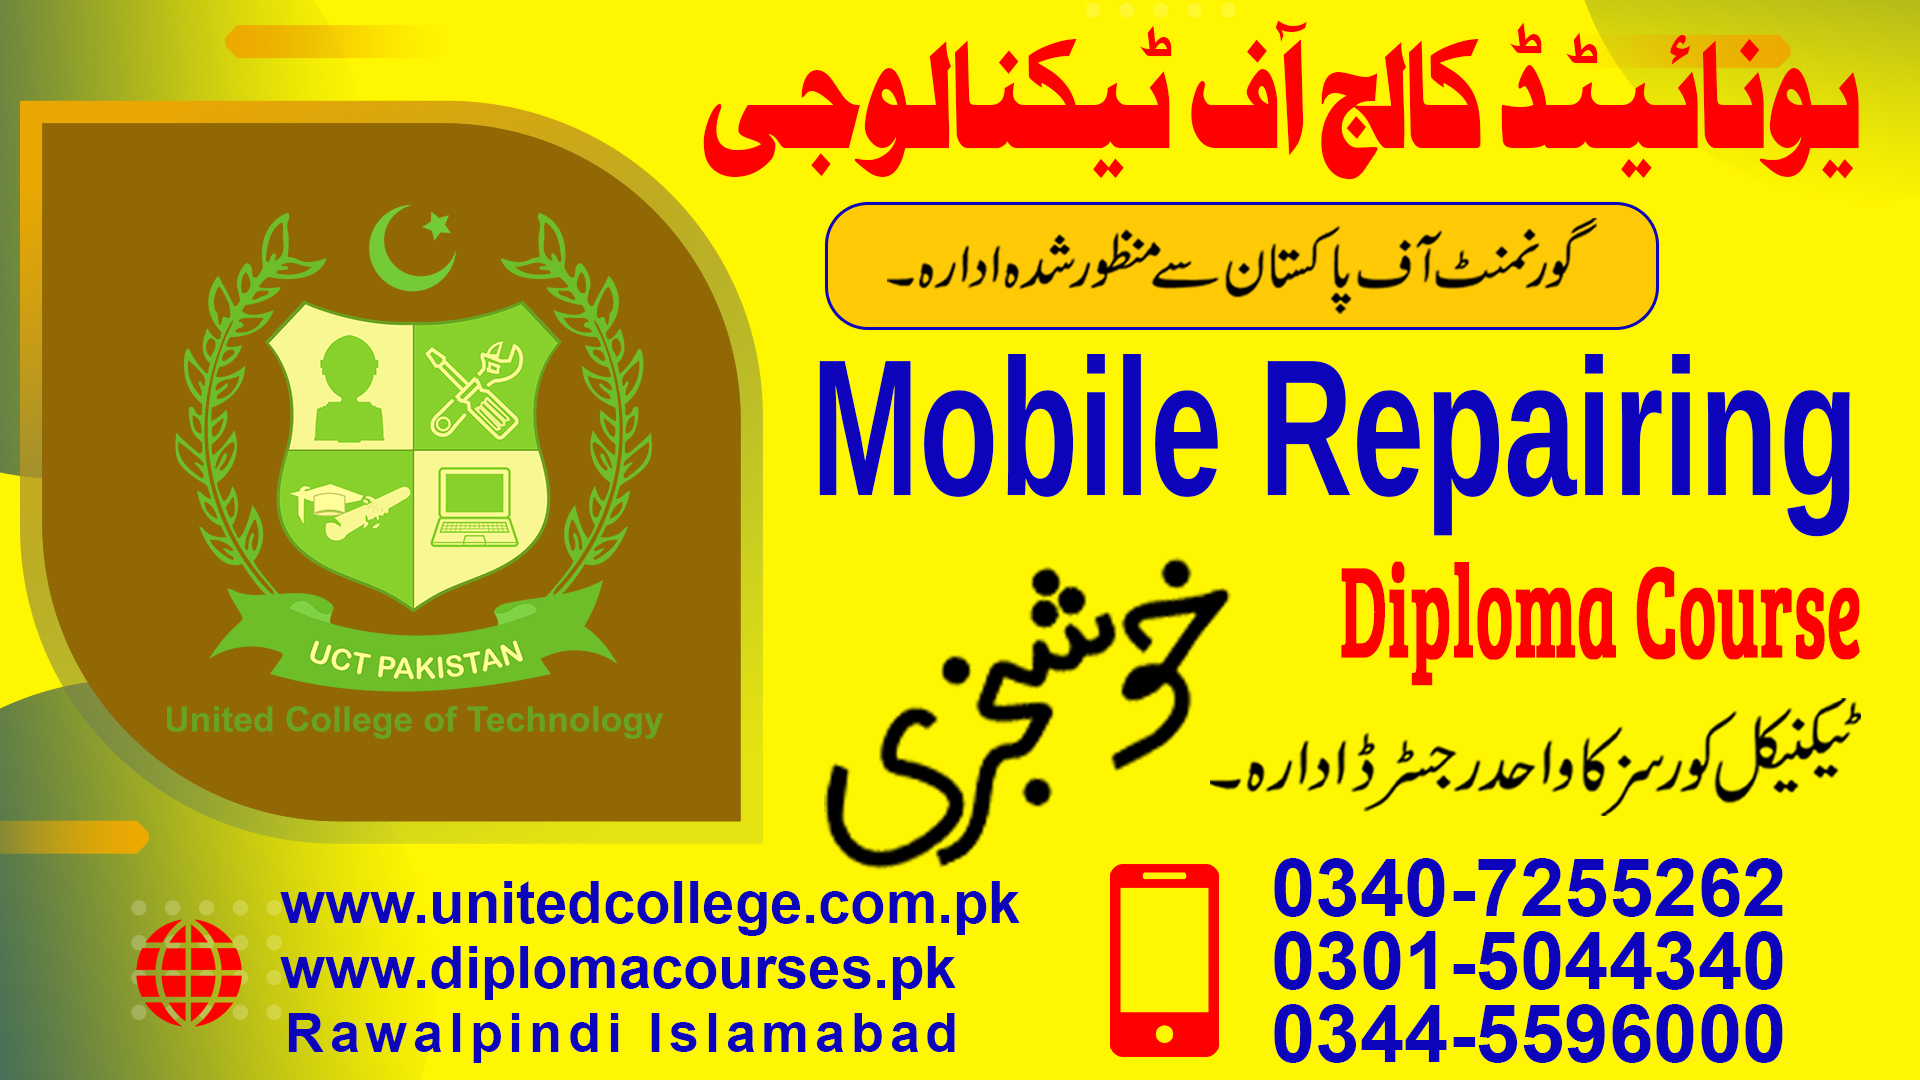 MOBILE REPAIRING COURSE IN RAWALPINDI ISLAMABAD PAKISTAN